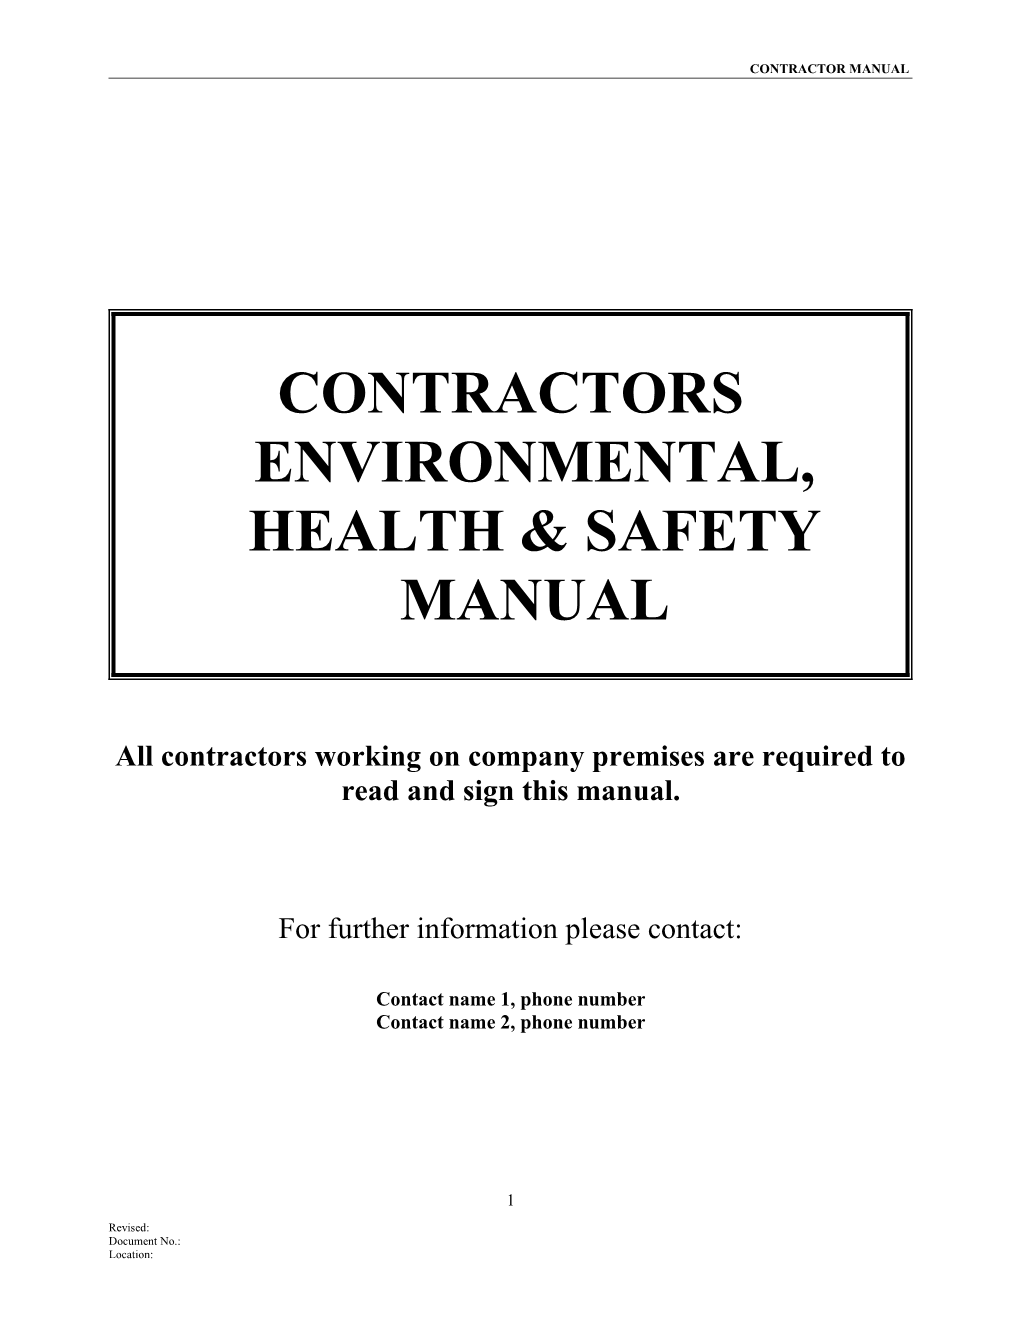 Contractors Environmental, Health & Safety Manual